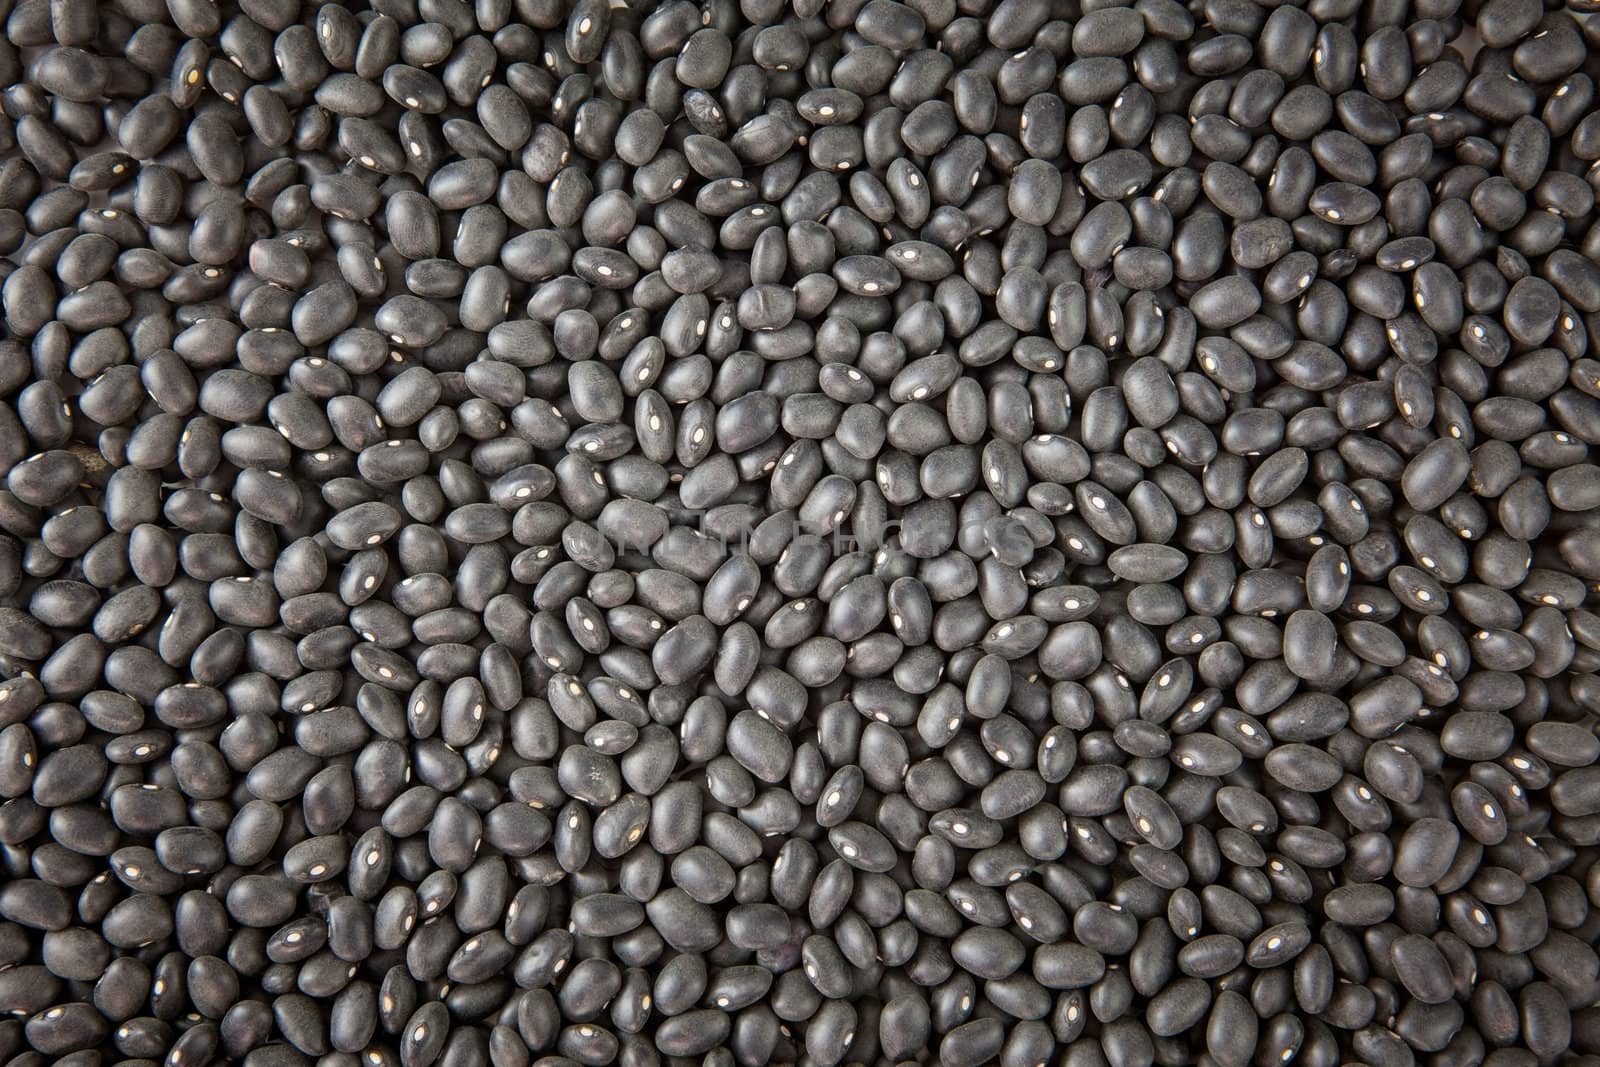 Black beans isolated on white background